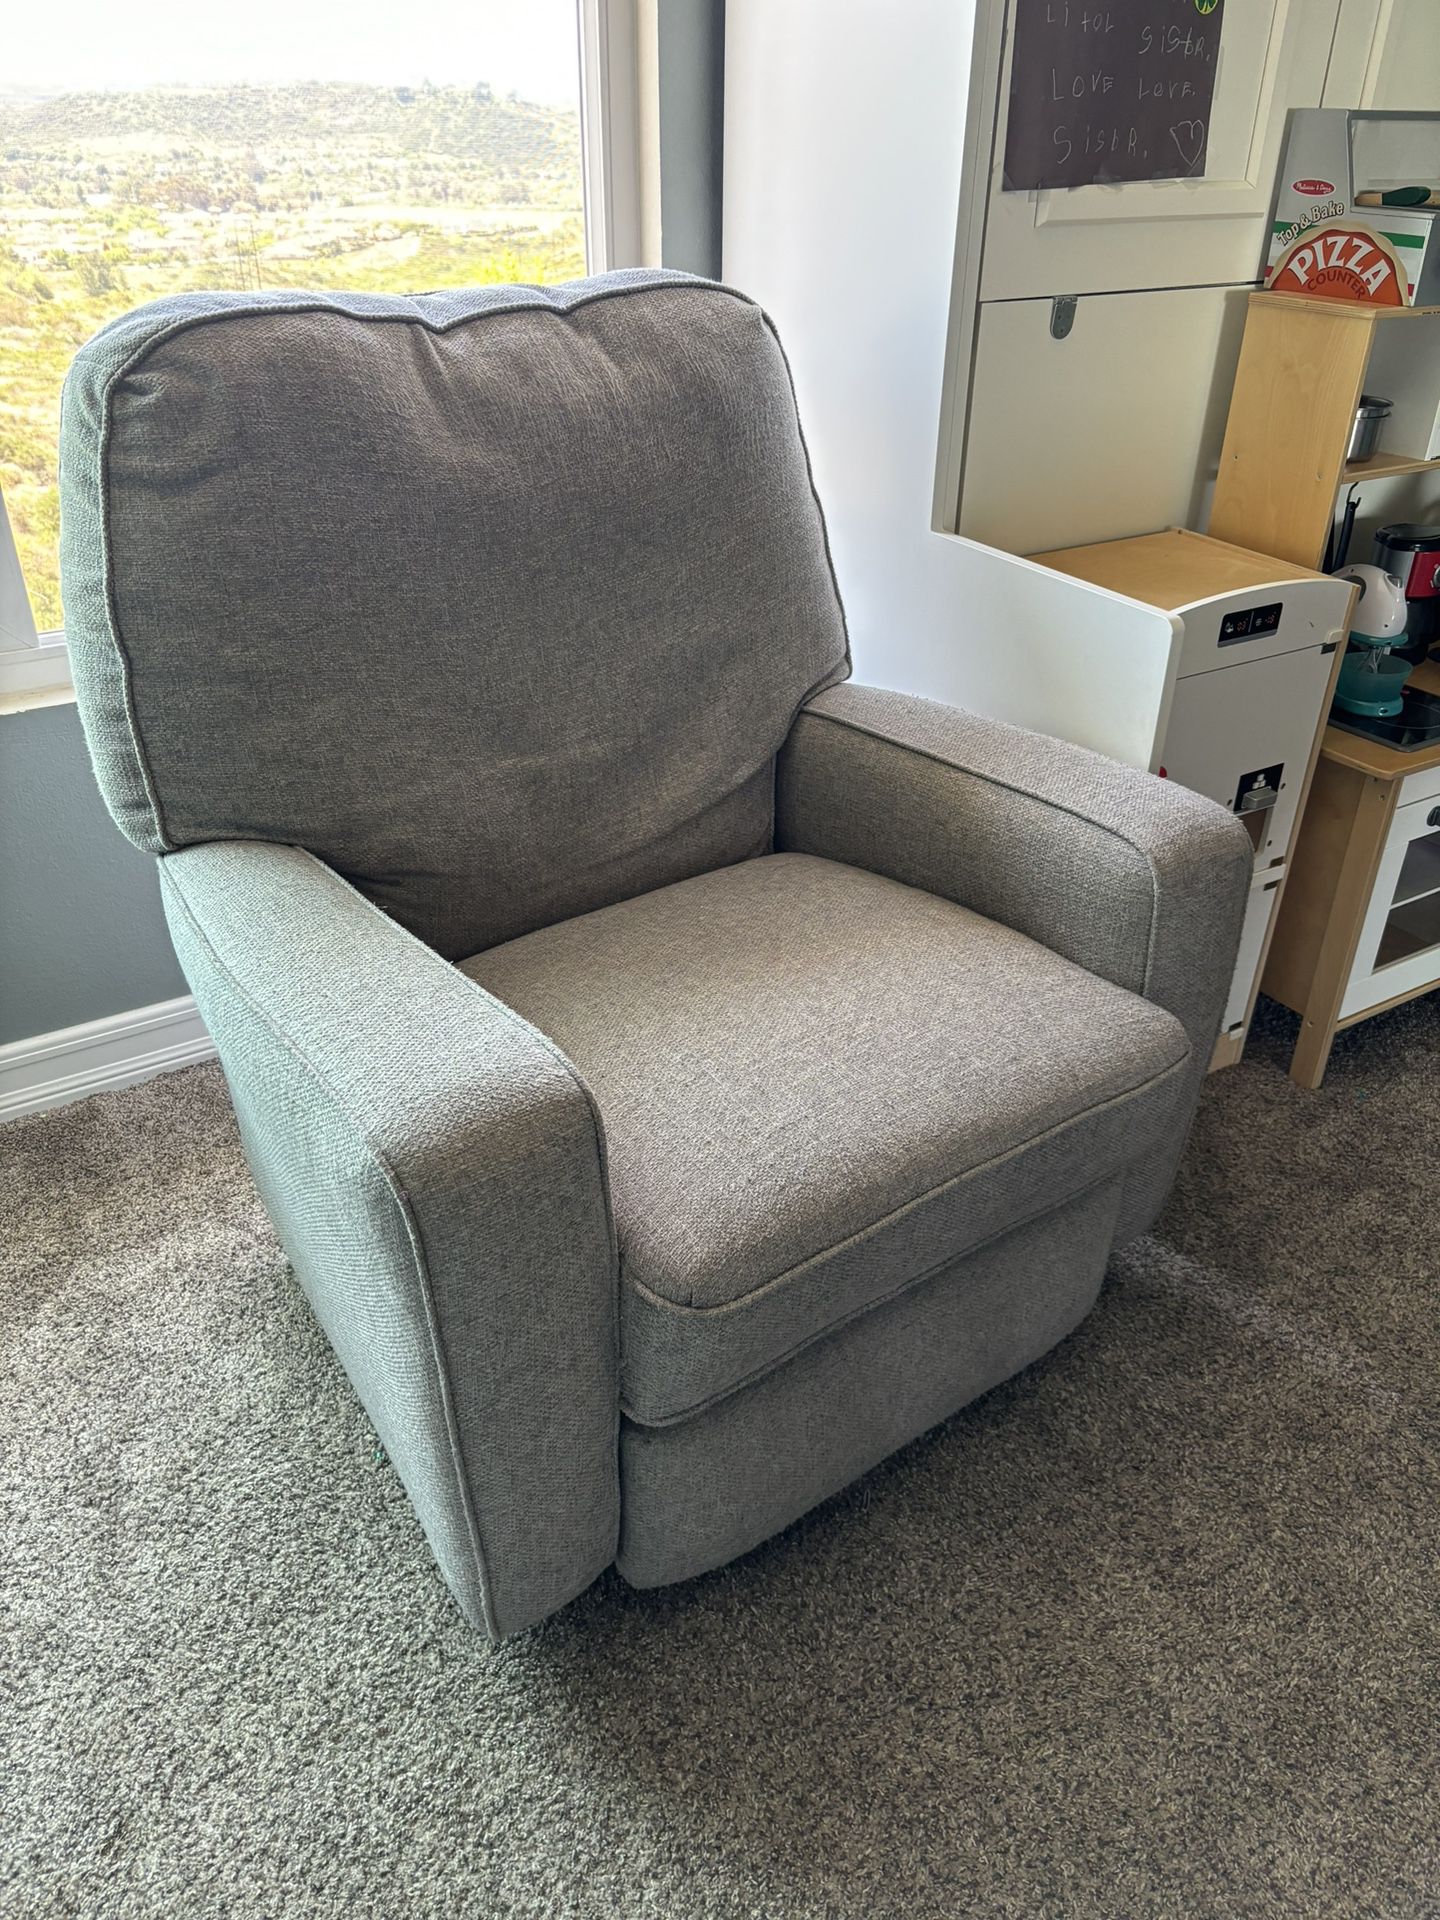 Nursery Swivel Recliner Chair